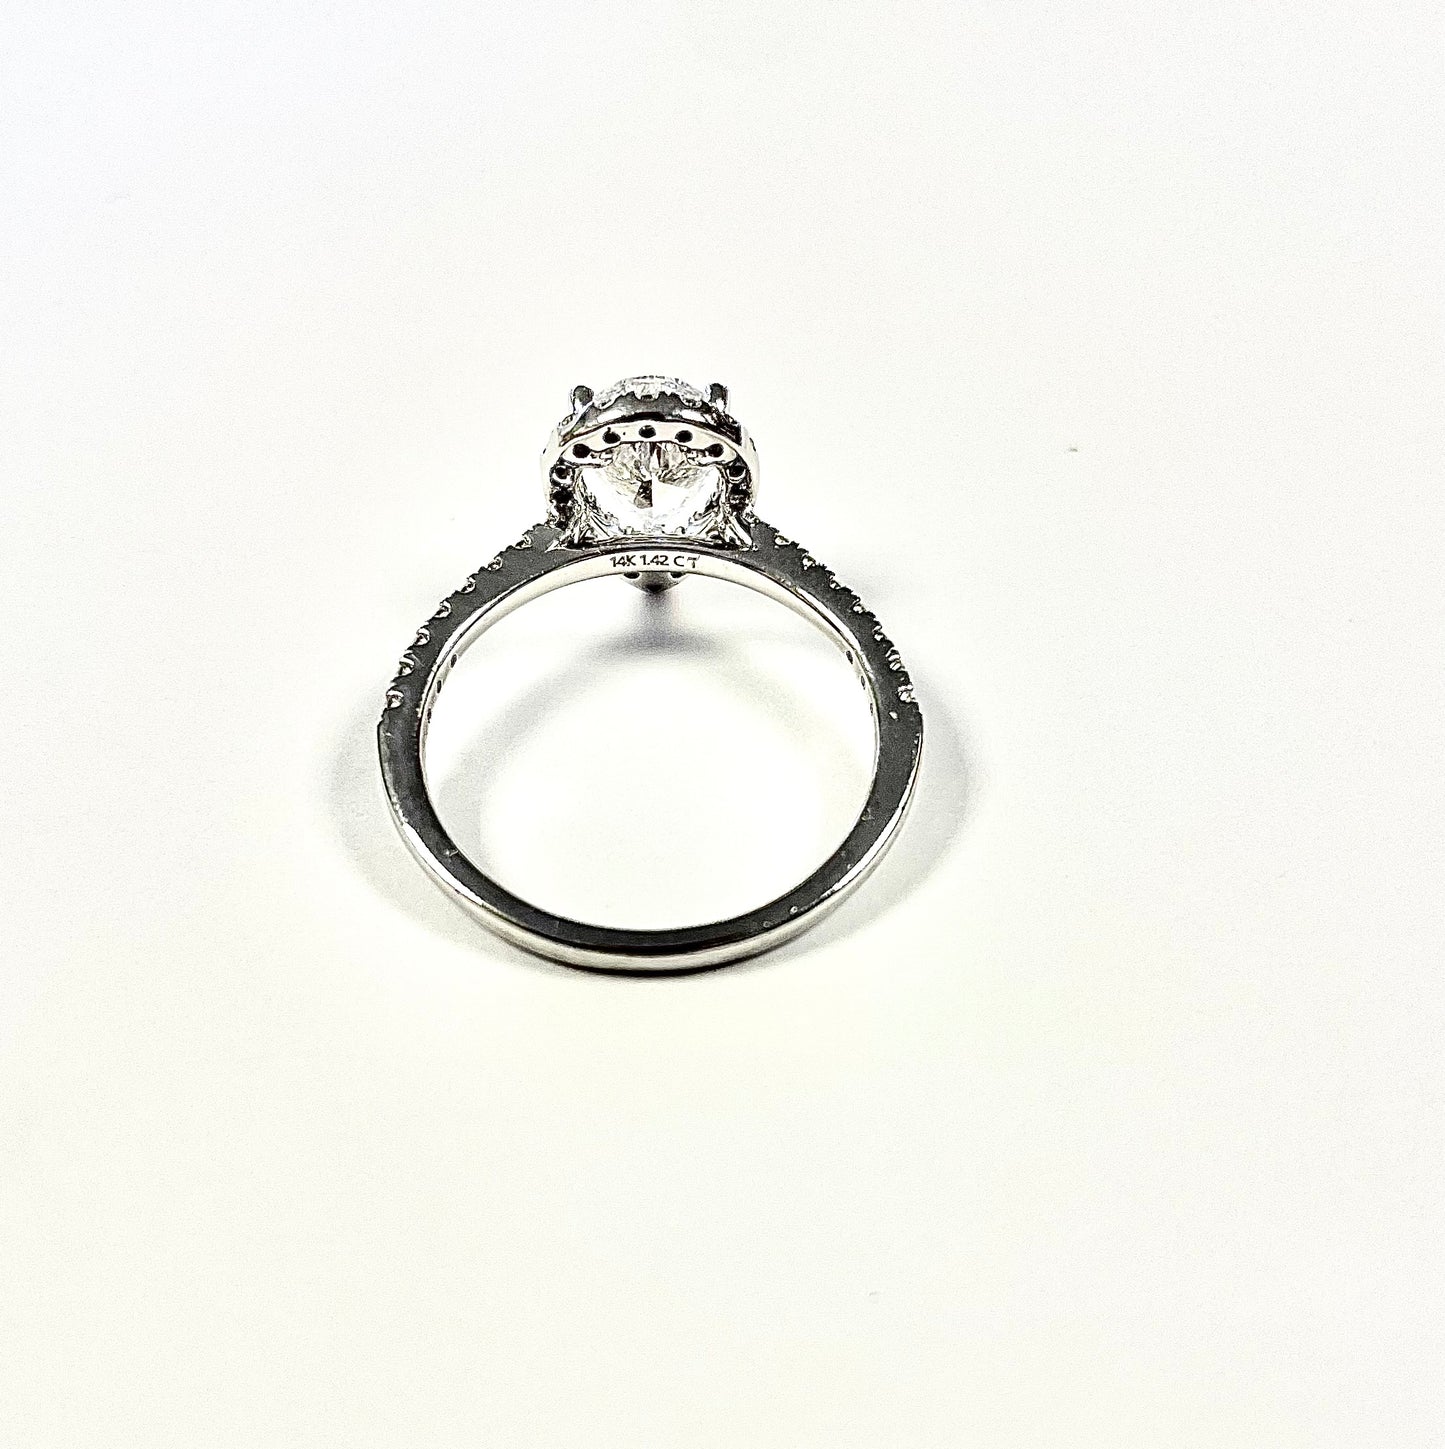 1CT Pear LAB Diamond Ring